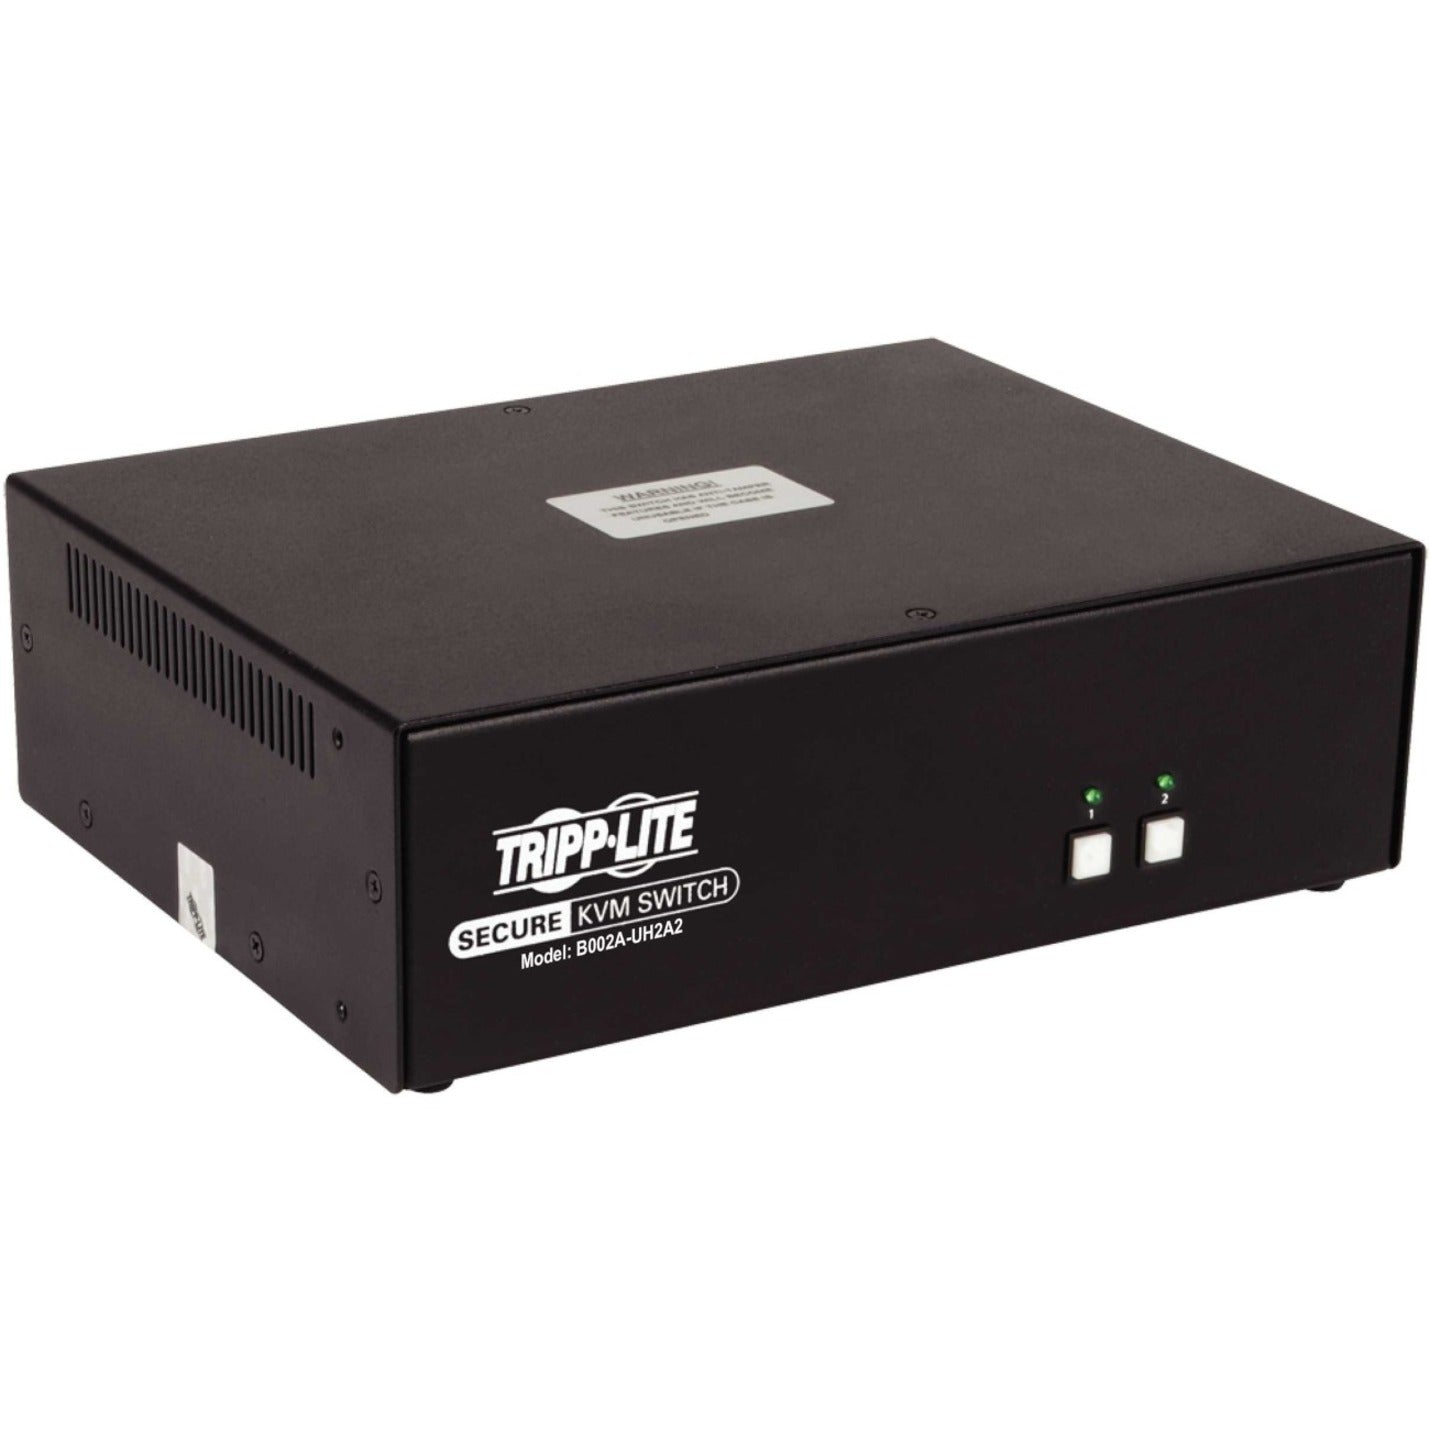 Tripp Lite B002A-UH2A2 2-端口 双显示器 安全 KVM 切换器，HDMI - 4K，NIAP PP3.0，音频，TAA Tripp Lite 牌品牌名称：透明能效公司